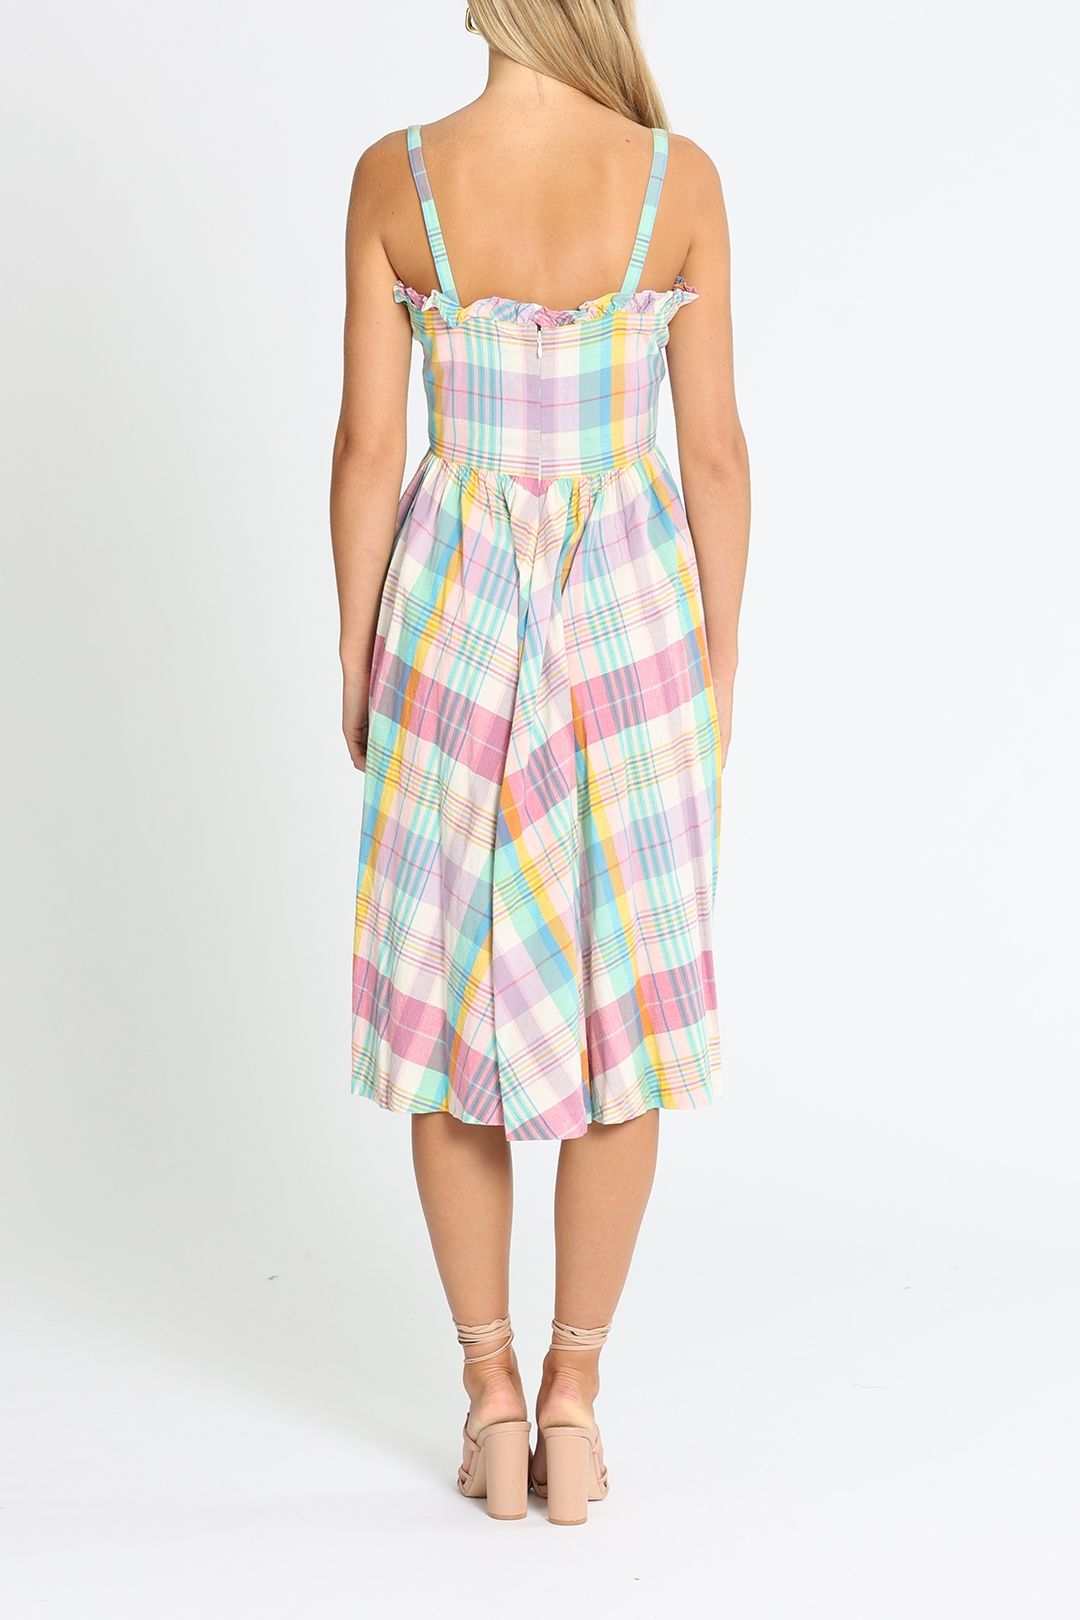 Ralph Lauren Multi Checkered Dress Midi